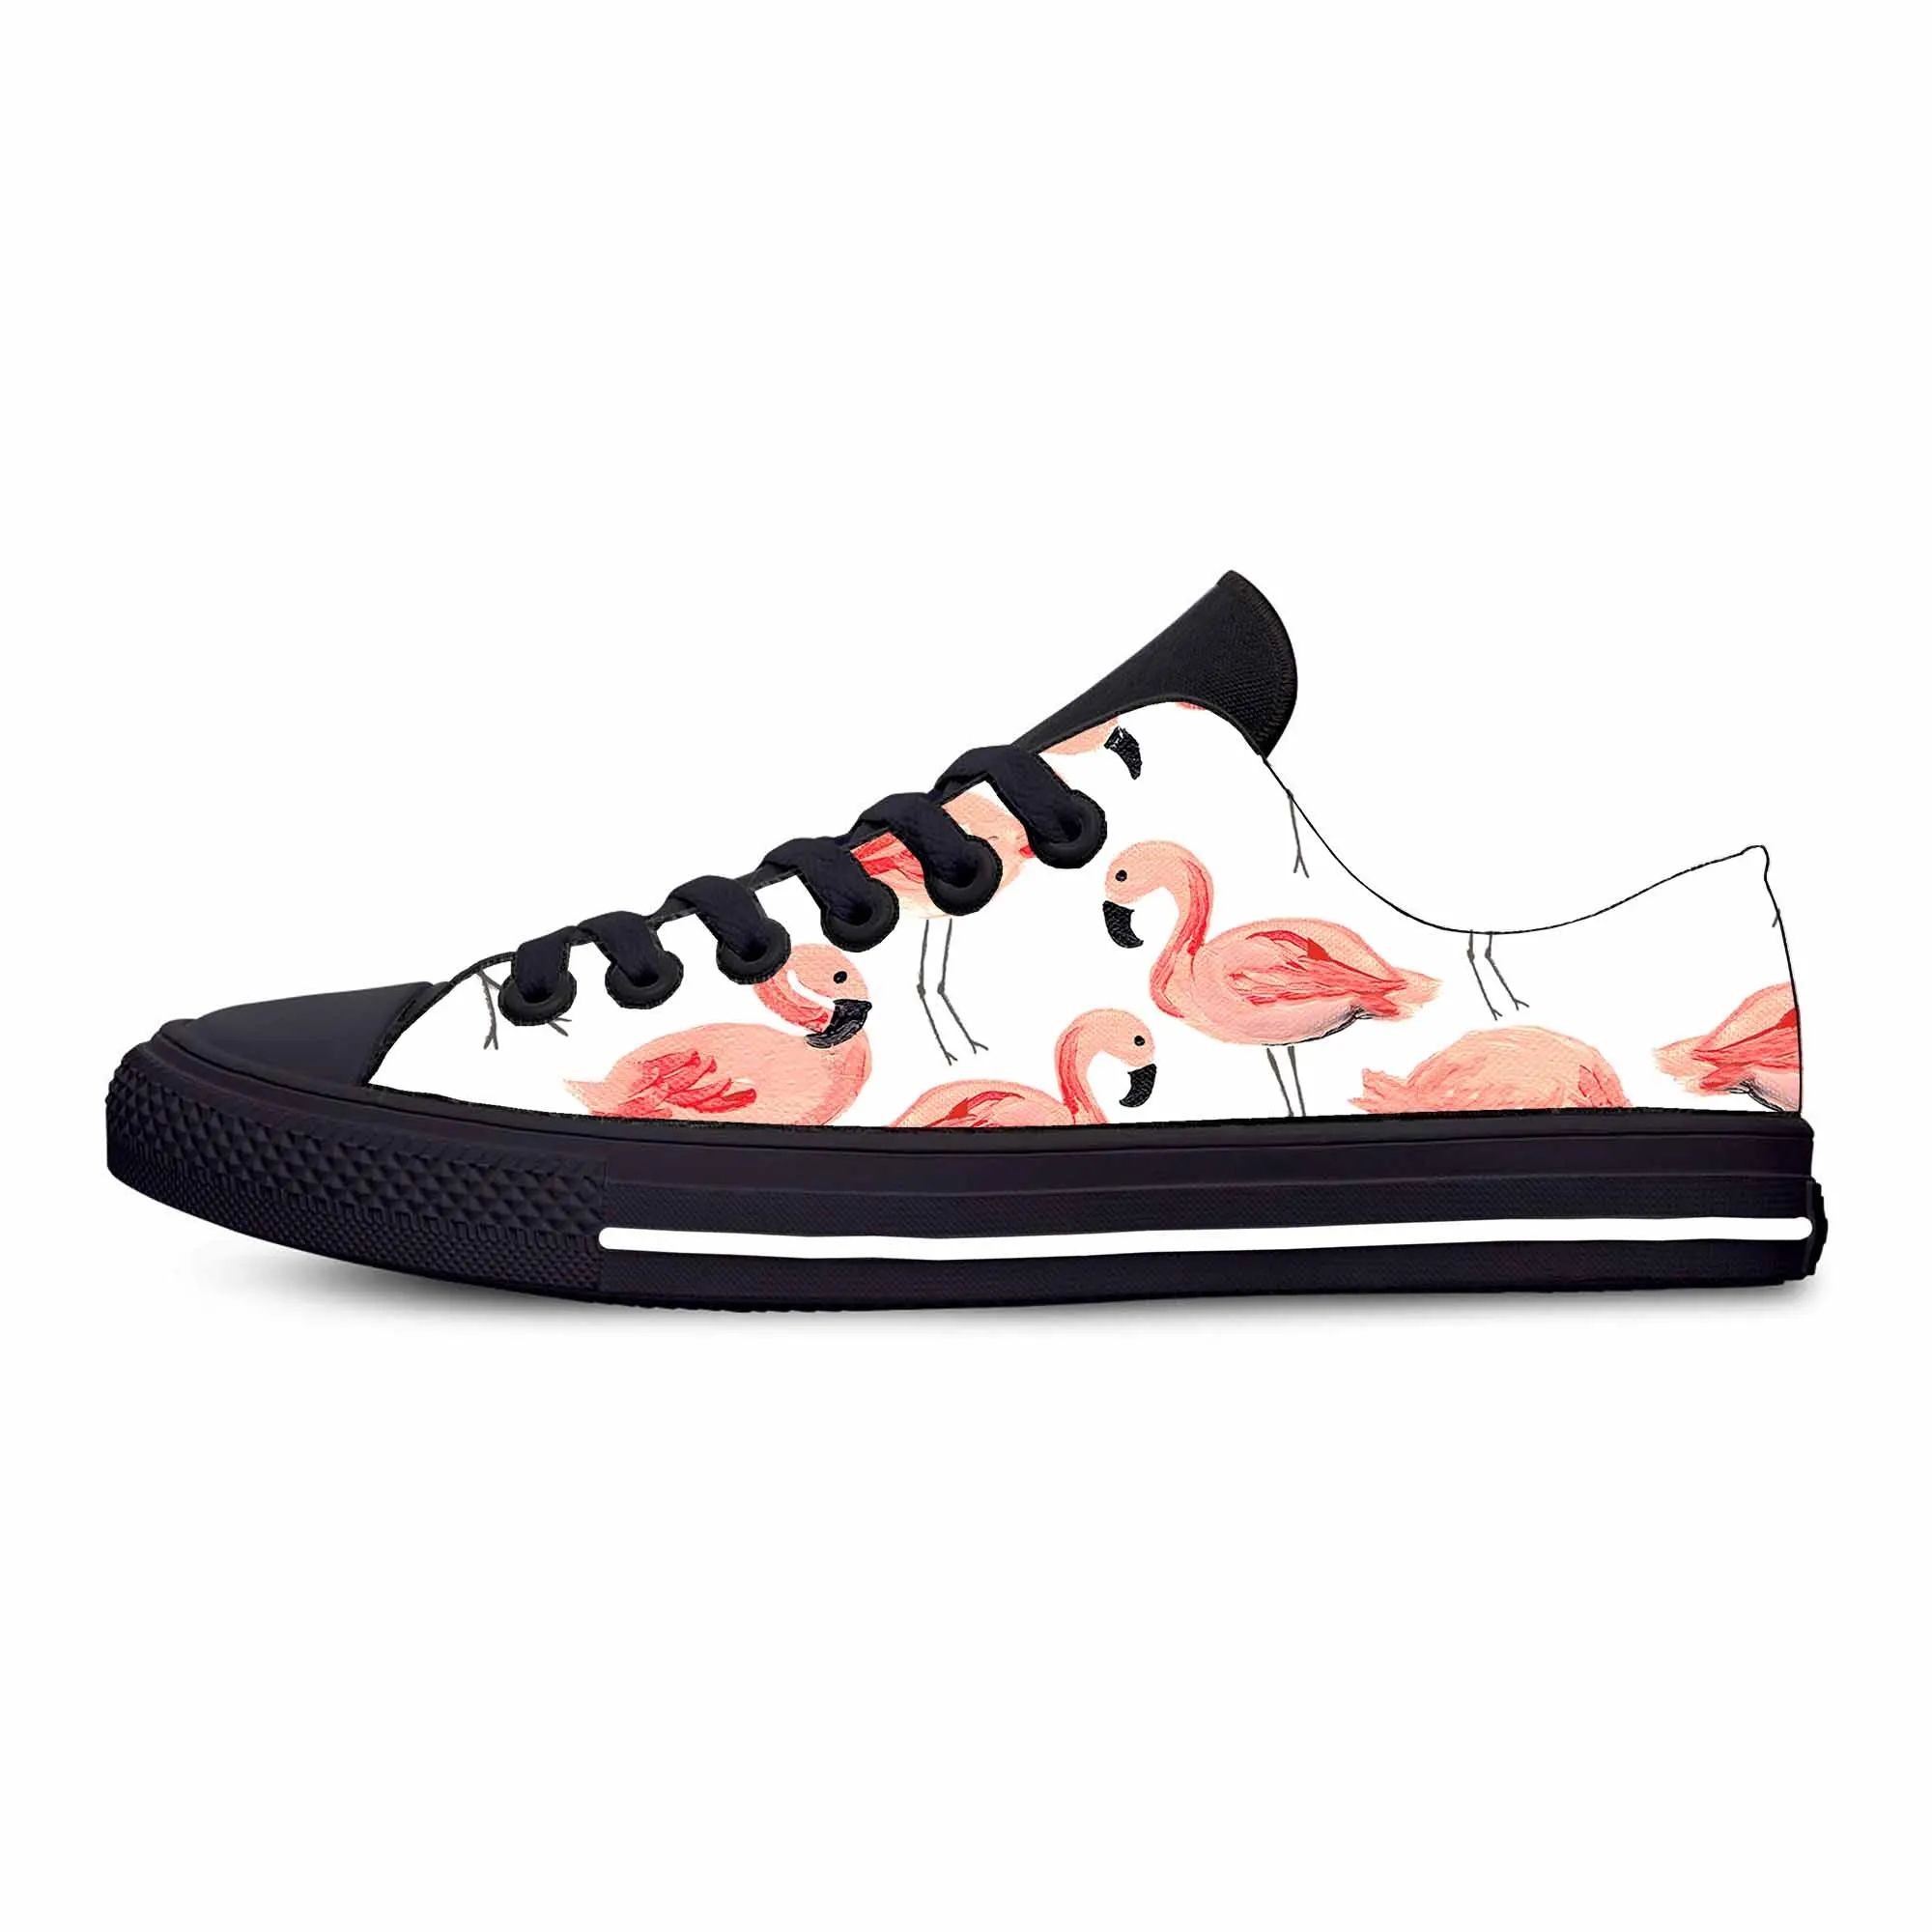 Färg: Flamingo Pattern17Shoe Storlek: 7.5